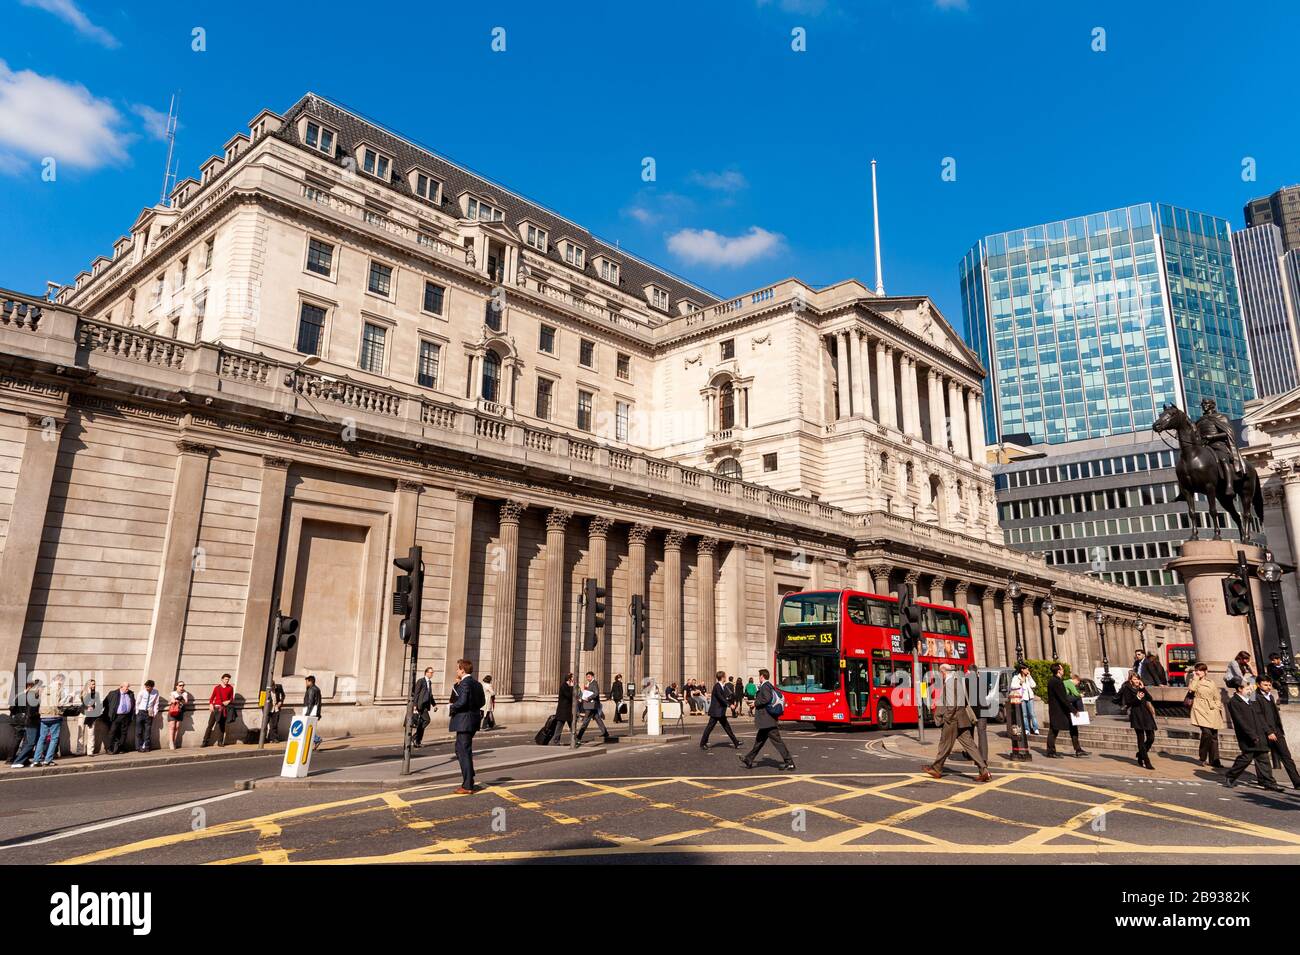 La Banque d'Angleterre, Londres, UK Banque D'Images